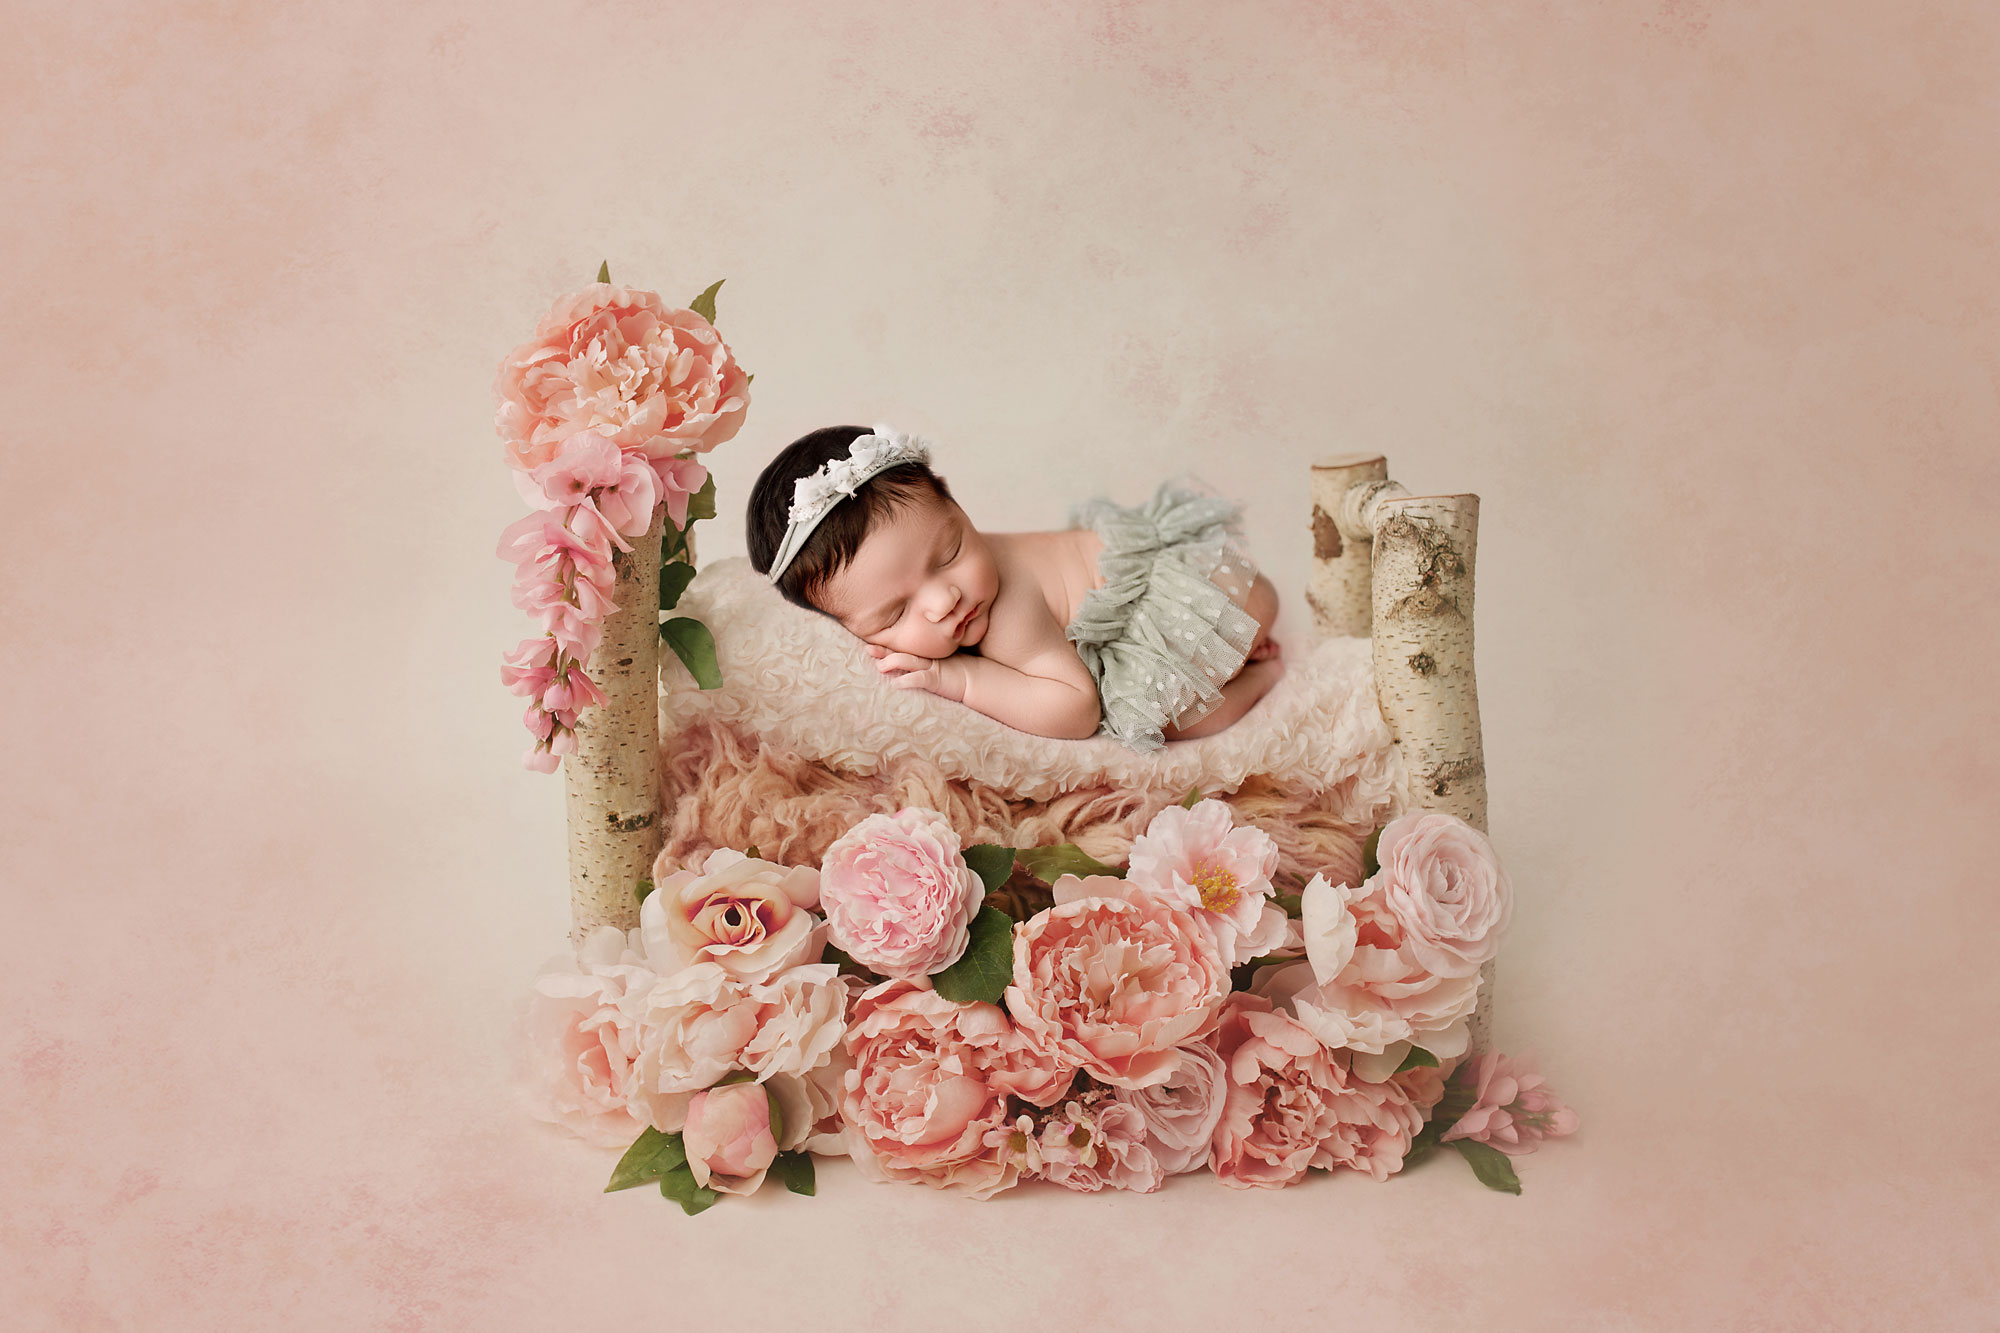 newborn photography digital composites, baby girl asleep on flower bed